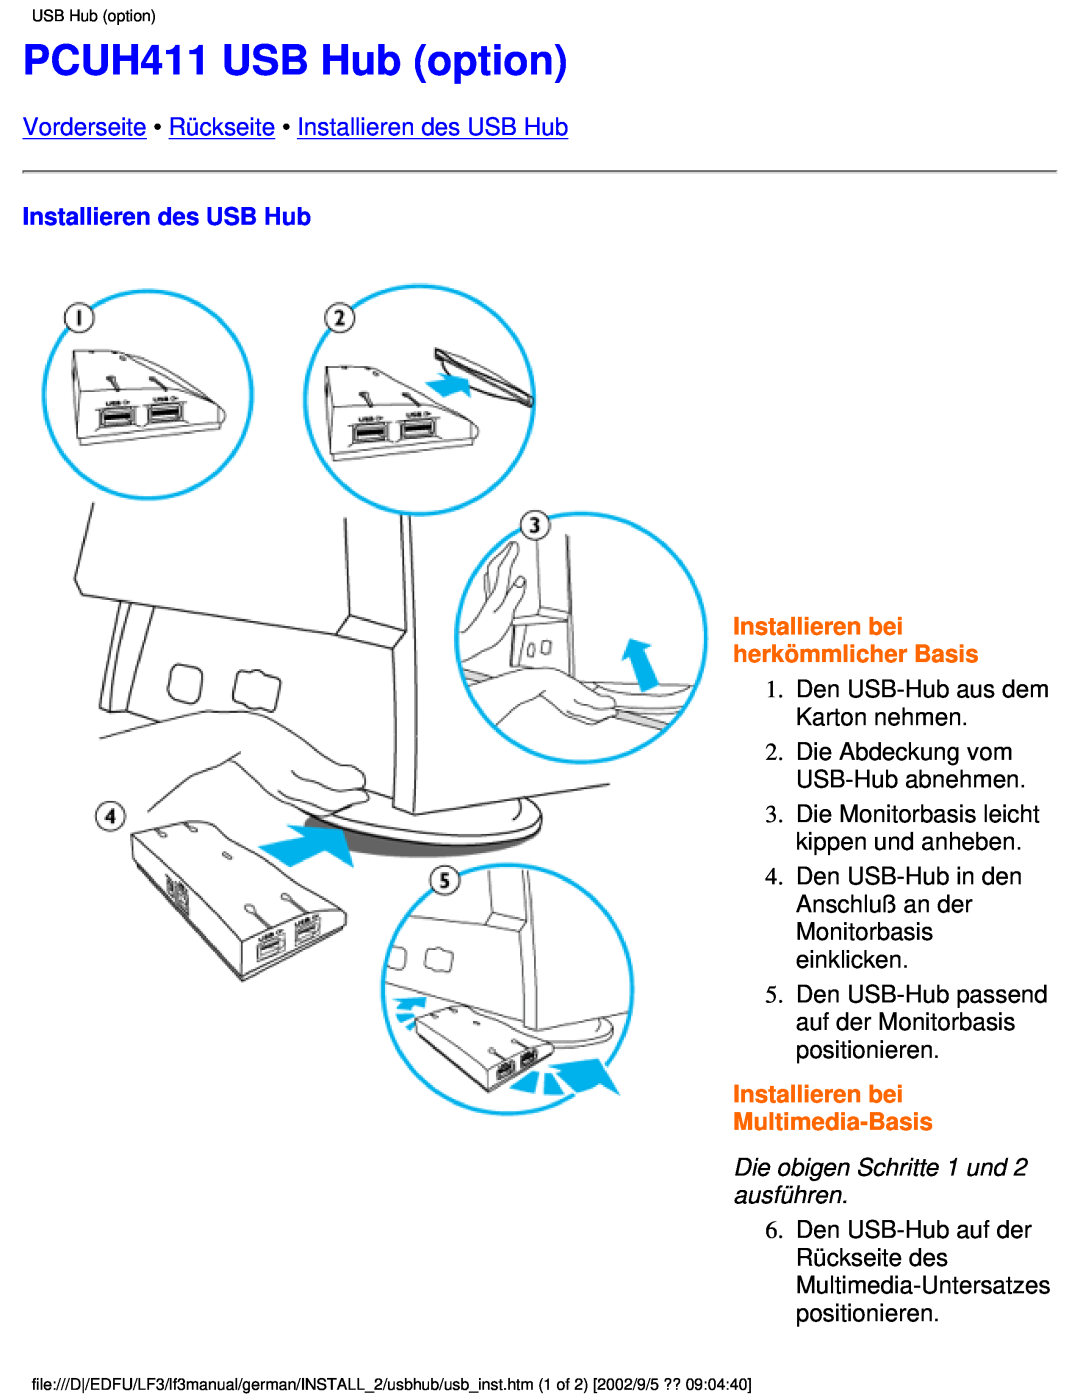 Philips 107E PCUH411 USB Hub option, Vorderseite Rückseite Installieren des USB Hub, Installieren bei herkömmlicher Basis 